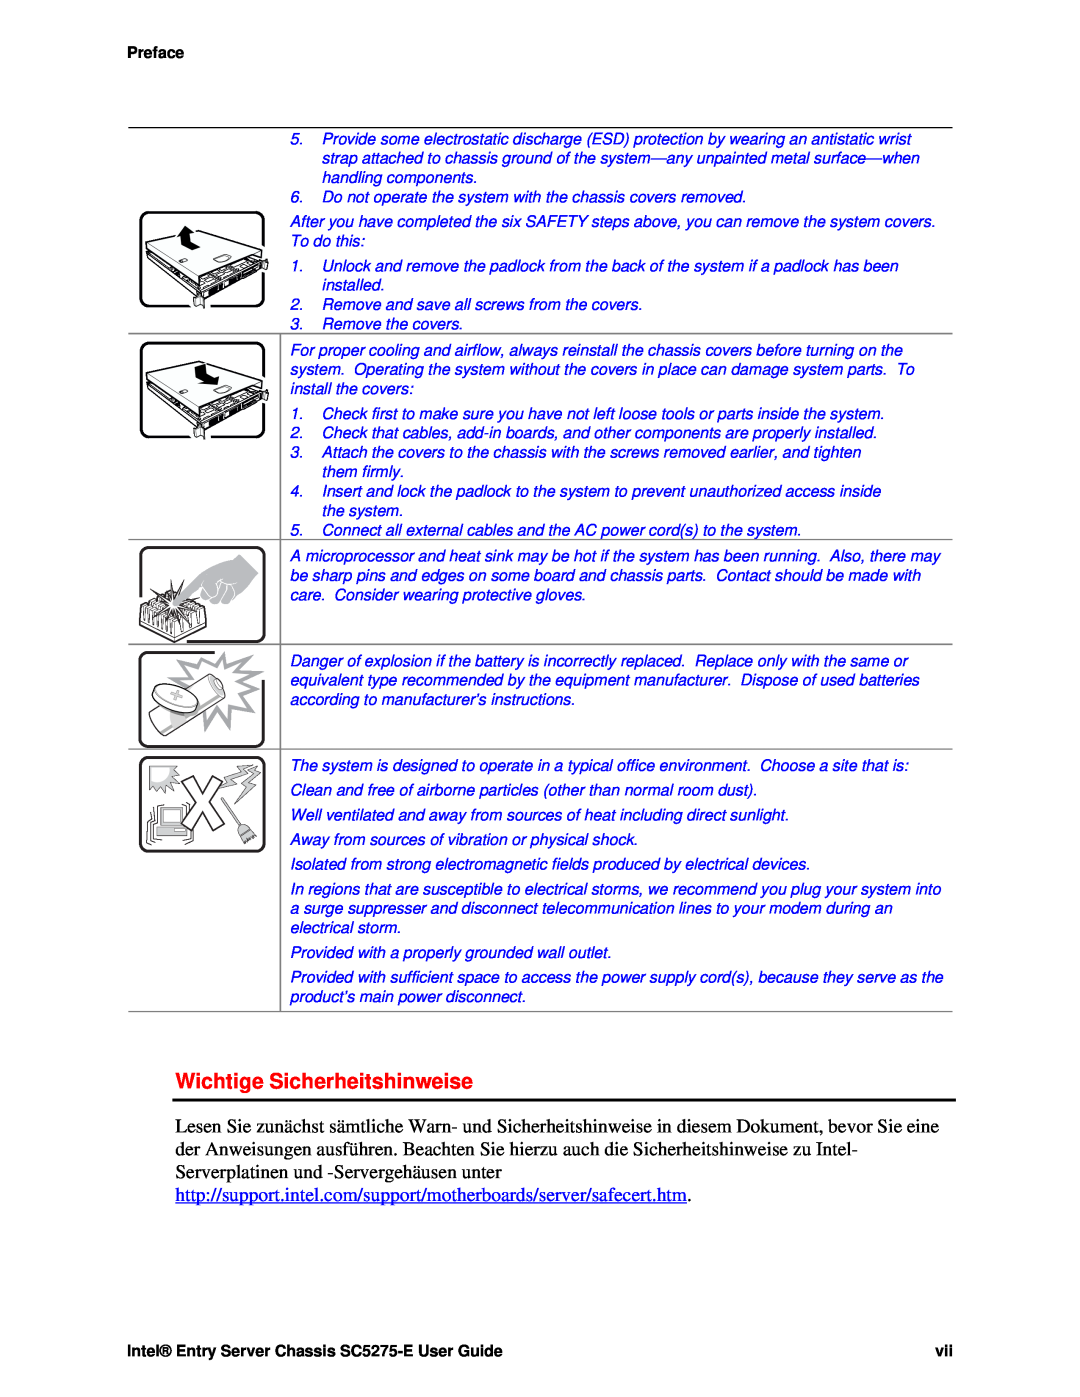 Intel C50277-001 manual Wichtige Sicherheitshinweise, Preface, Intel Entry Server Chassis SC5275-E User Guide 